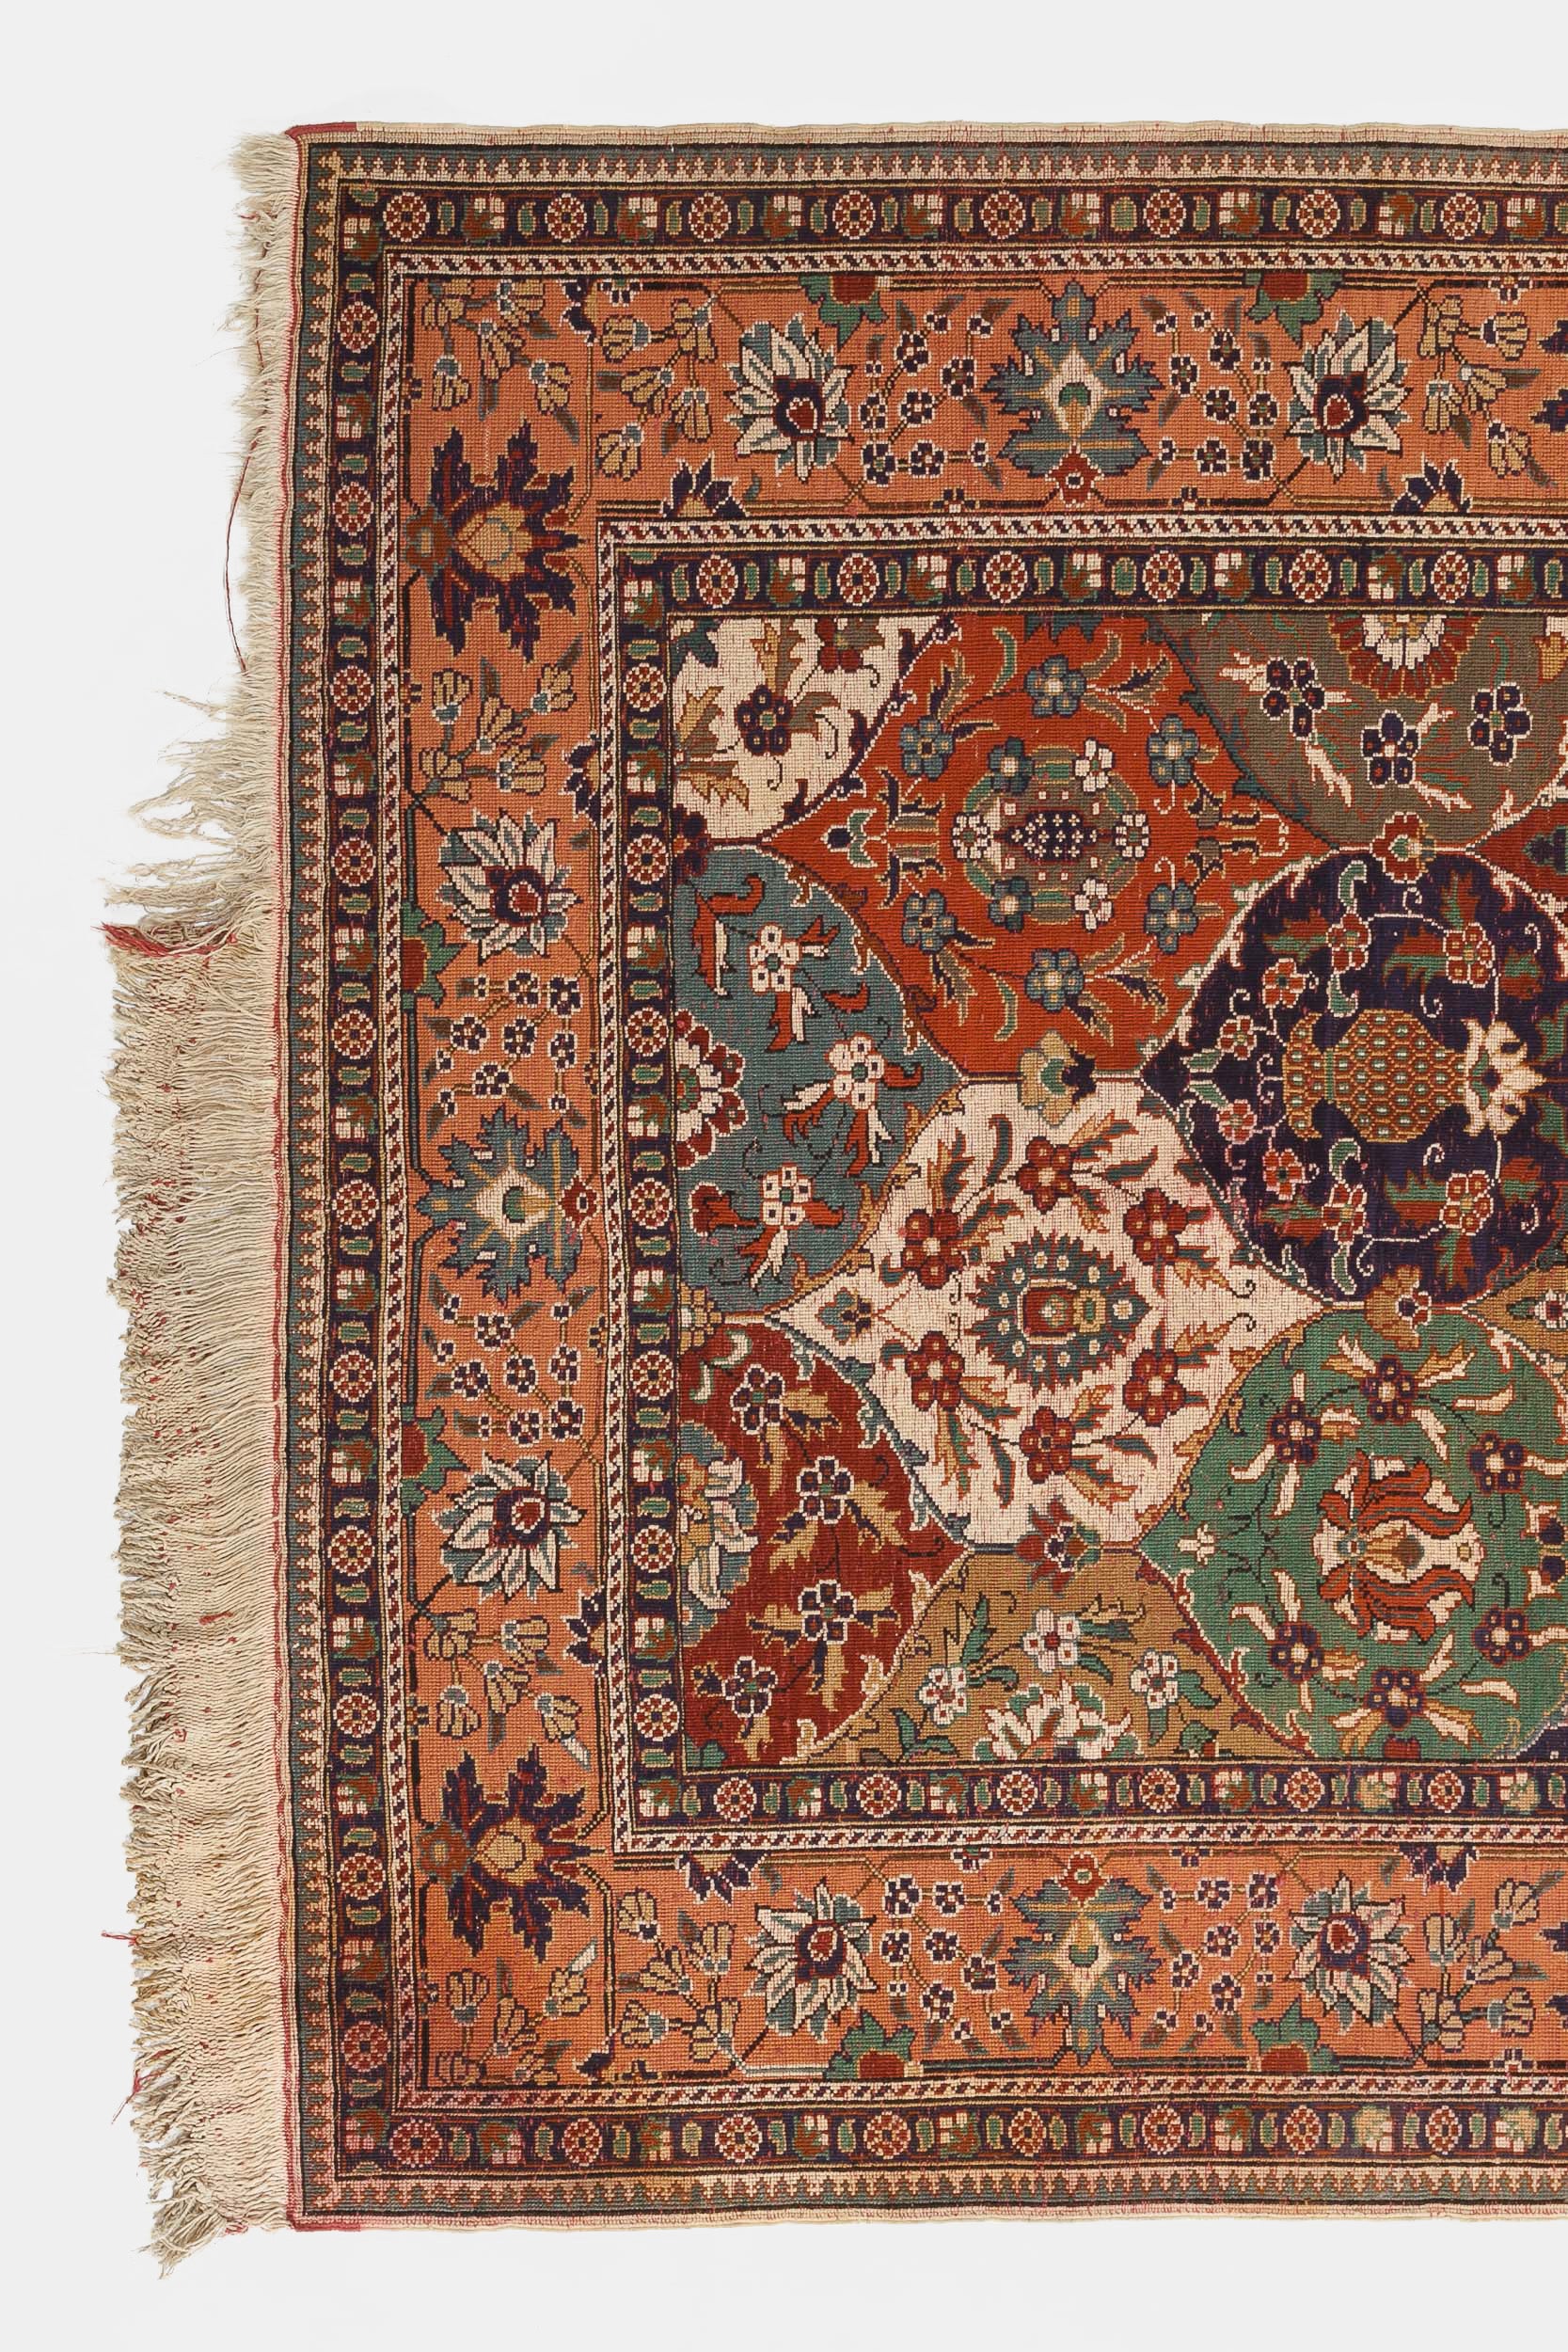 Antique Kayseri Cotton Carpet, 40s